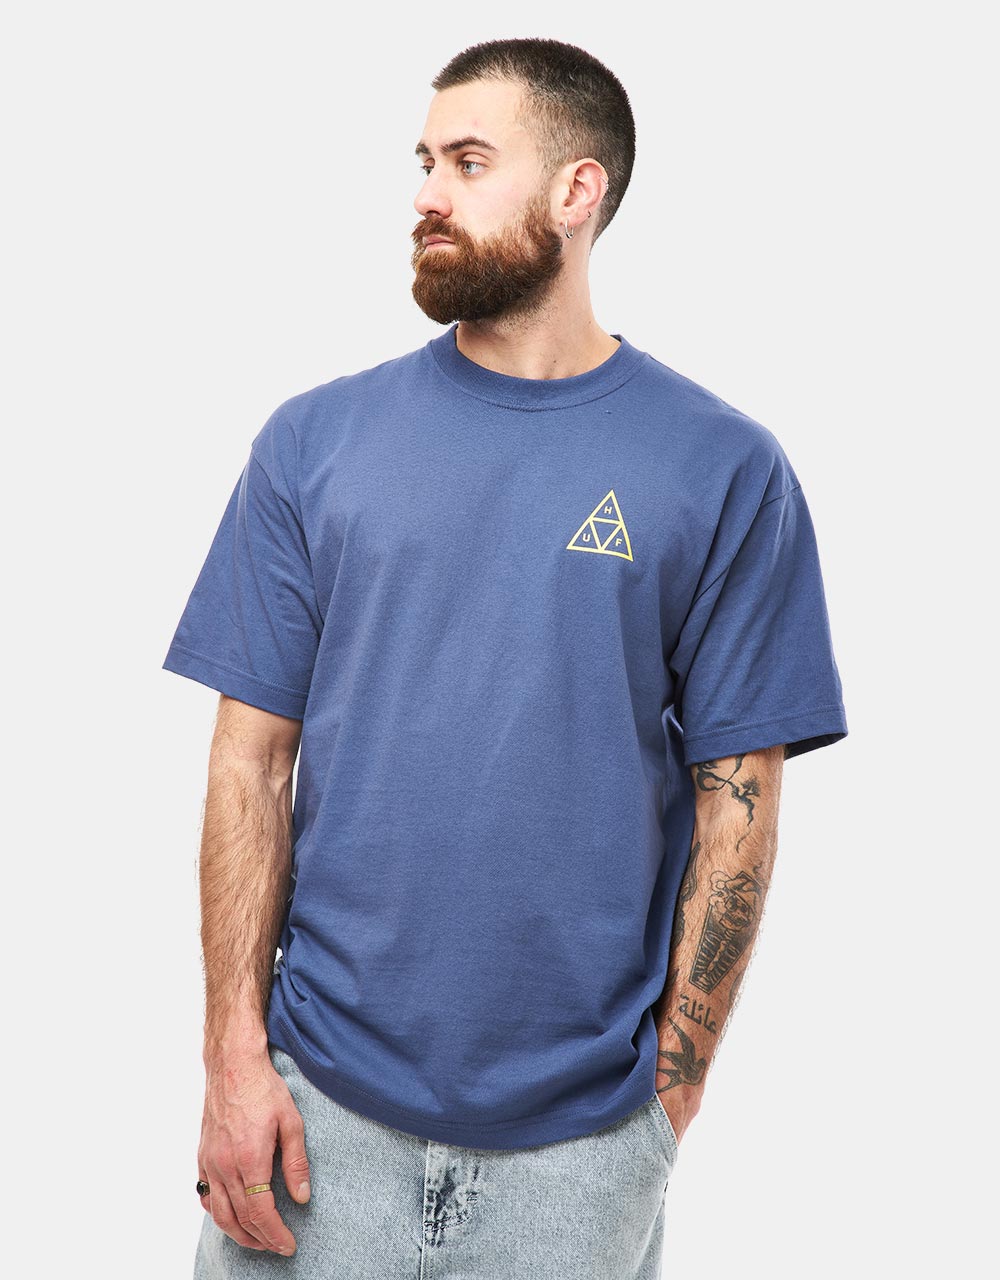 HUF Triple Triangle T-Shirt - Navy